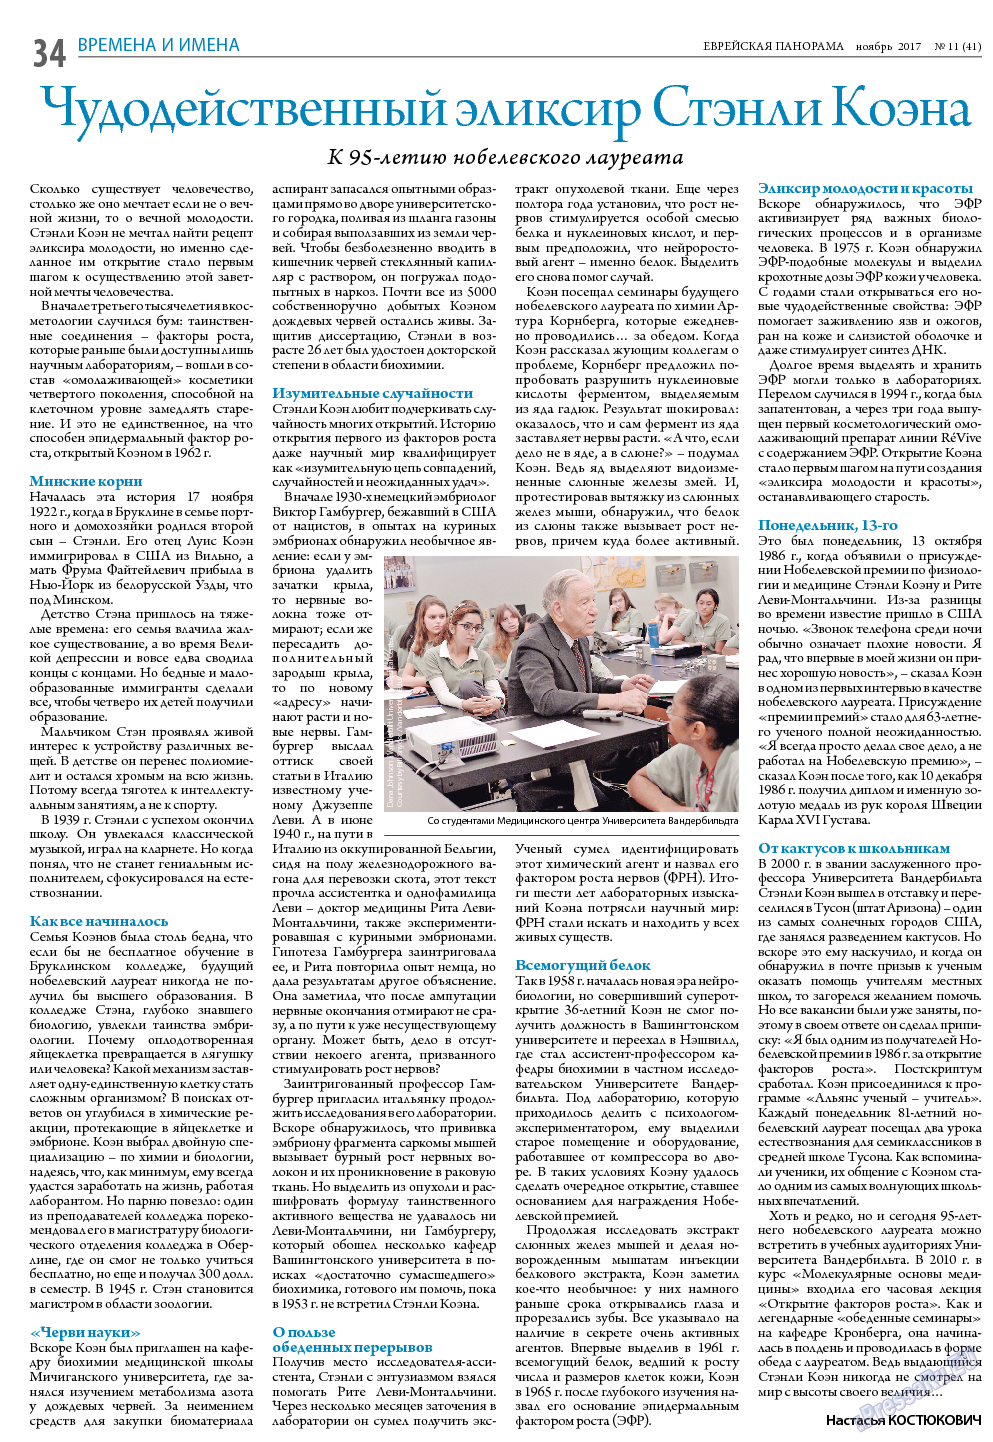 Еврейская панорама, газета. 2017 №11 стр.34